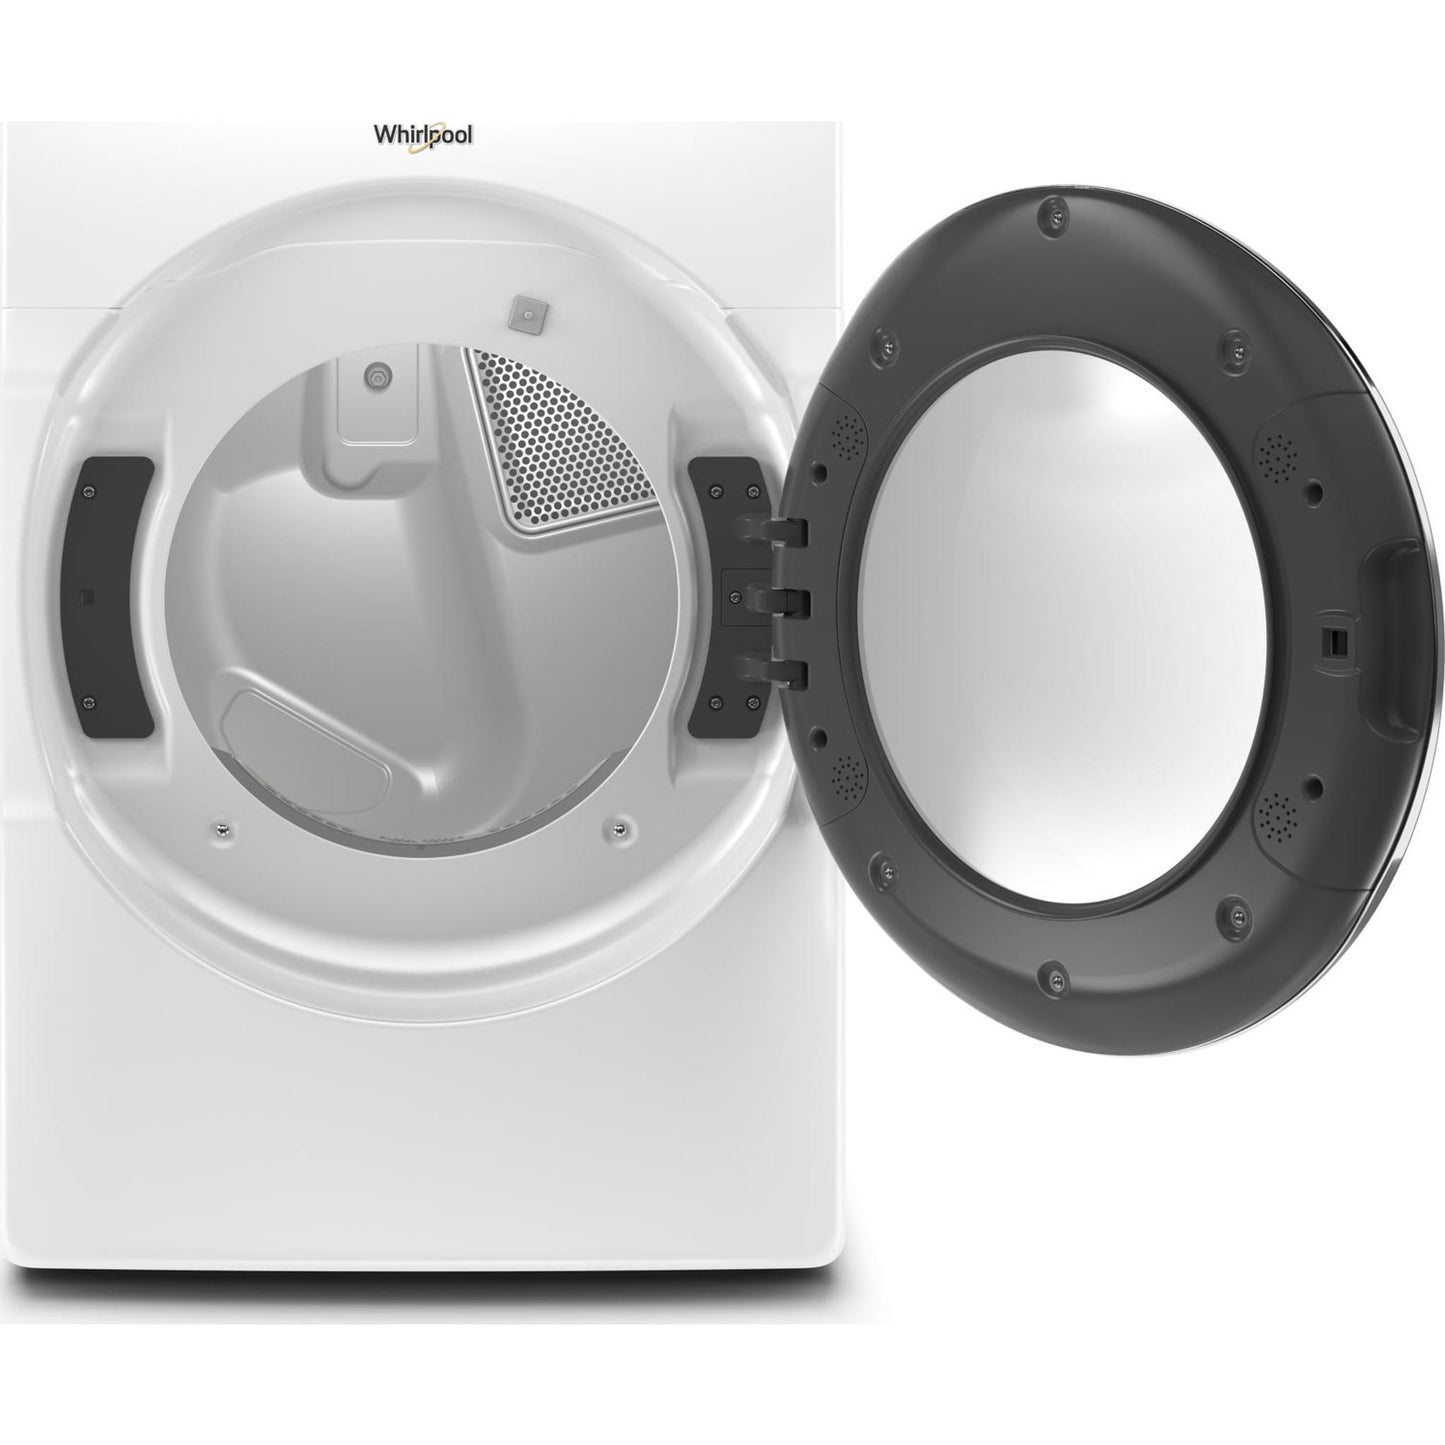 Whirlpool Dryer (YWED9620HW) - White